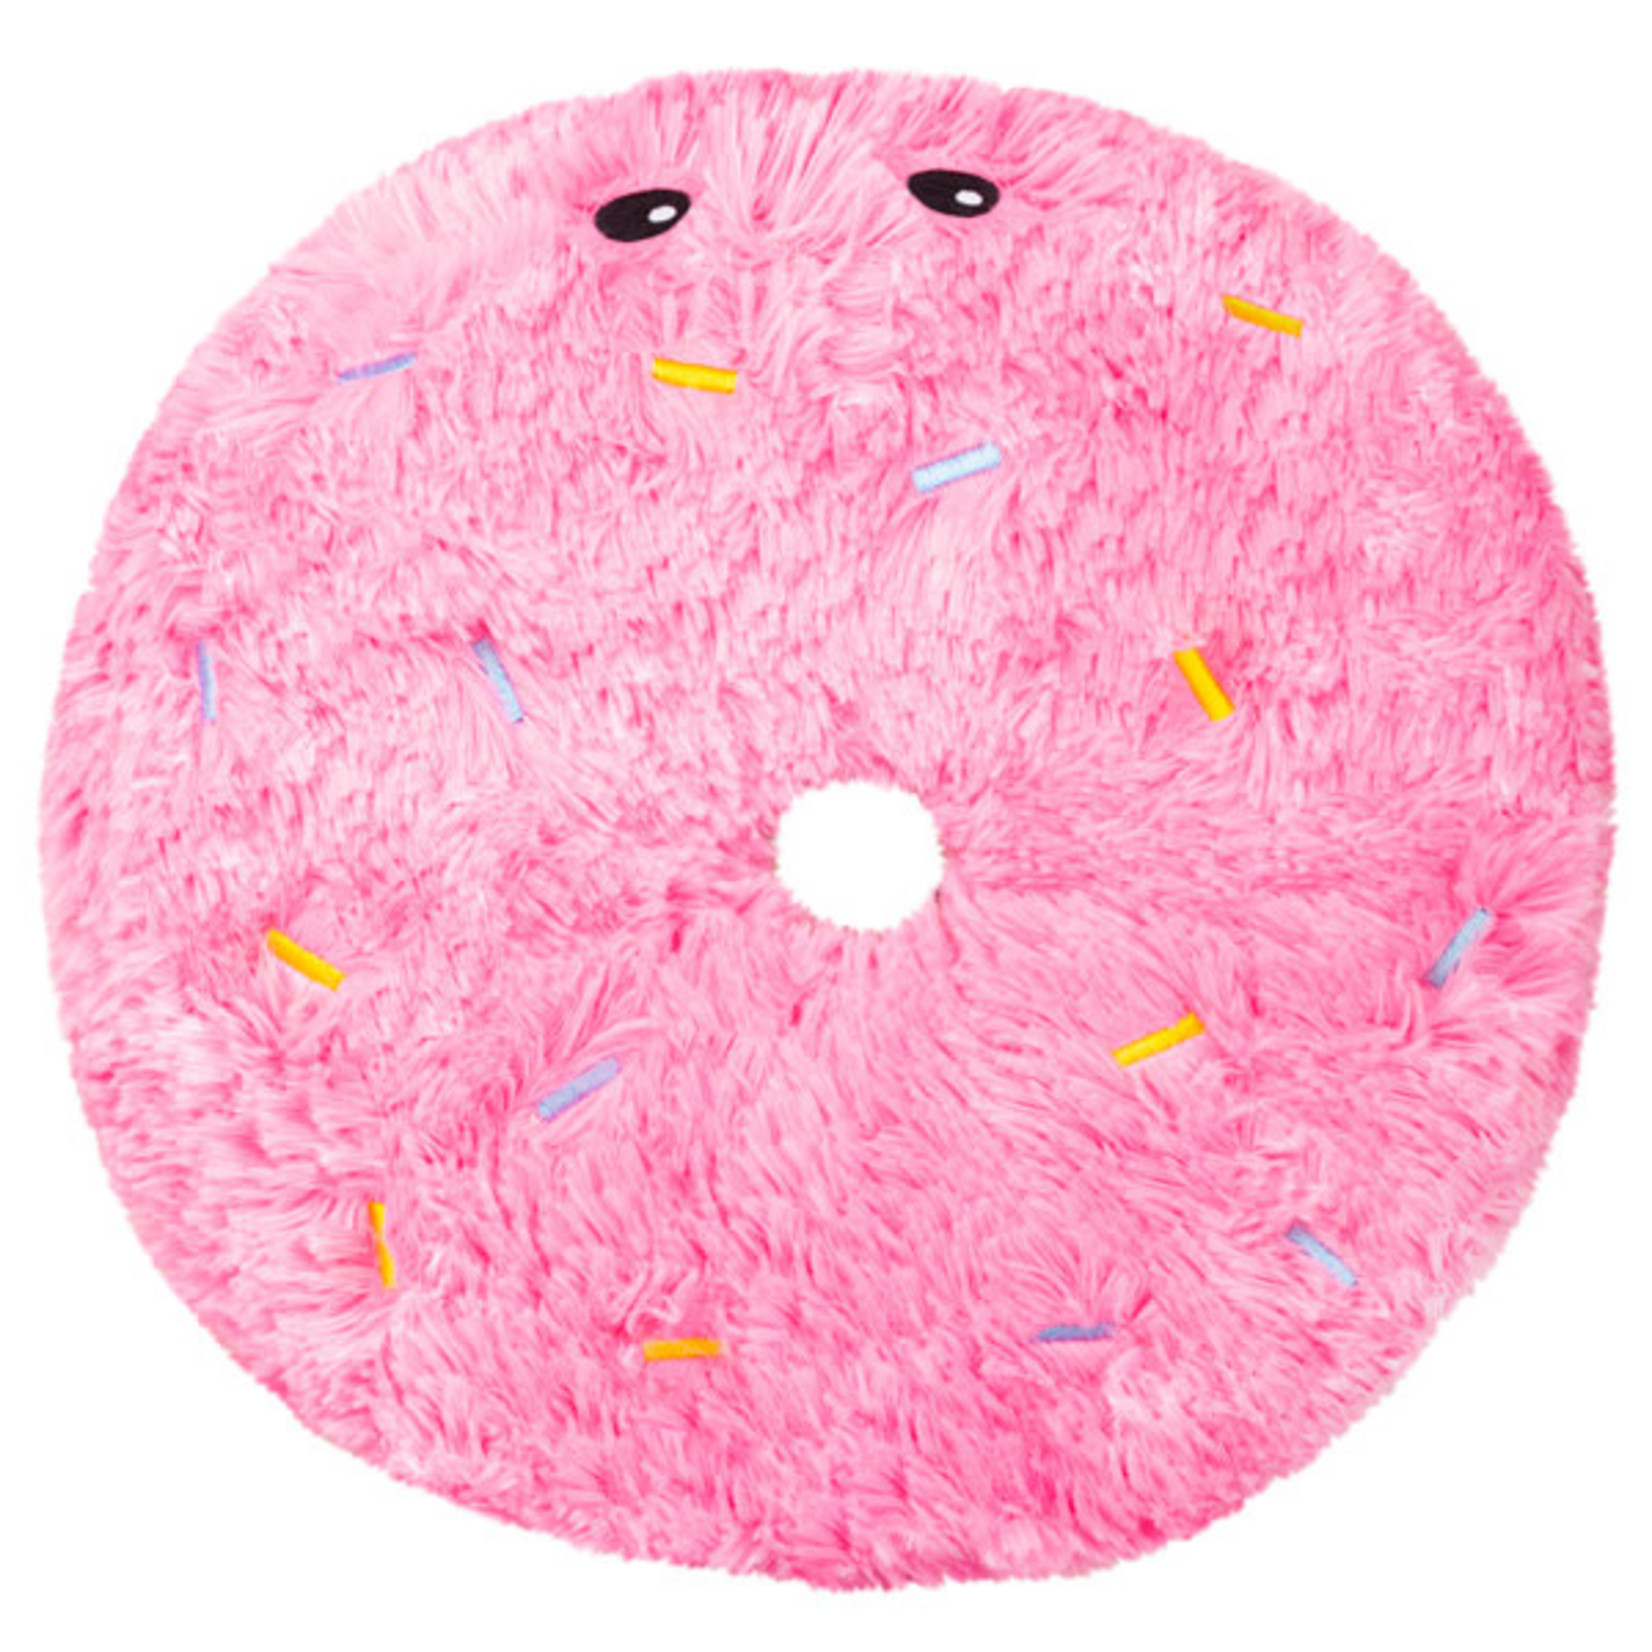 Squishable Mini: Pink Donut